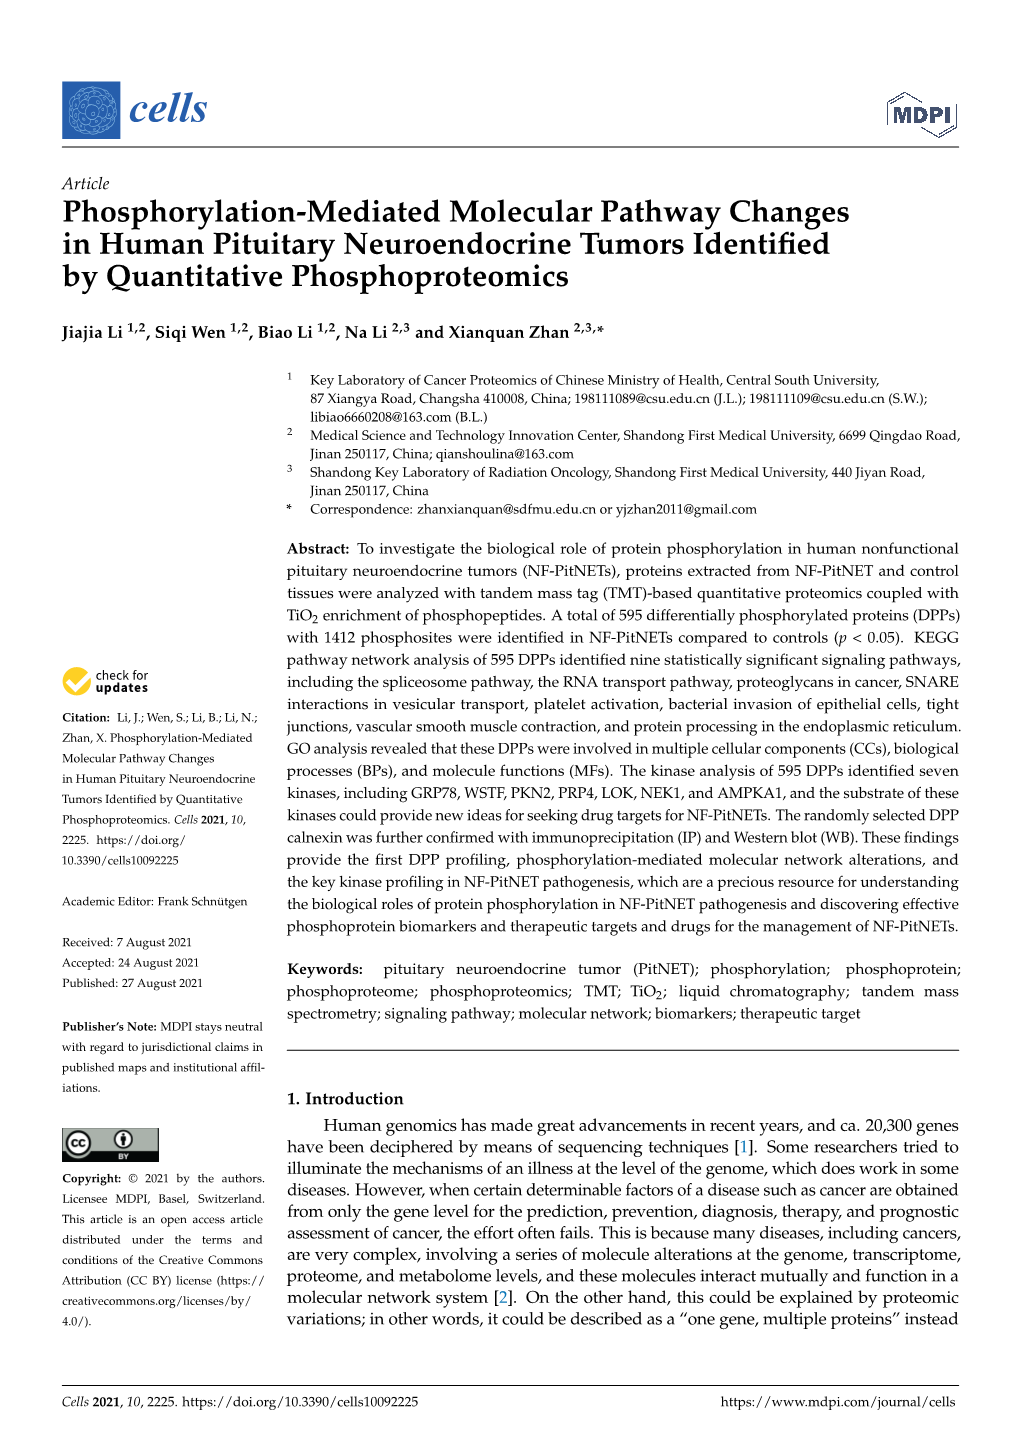 Phosphorylation-Mediated Molecular Pathway Changes in Human Pituitary Neuroendocrine Tumors Identiﬁed by Quantitative Phosphoproteomics